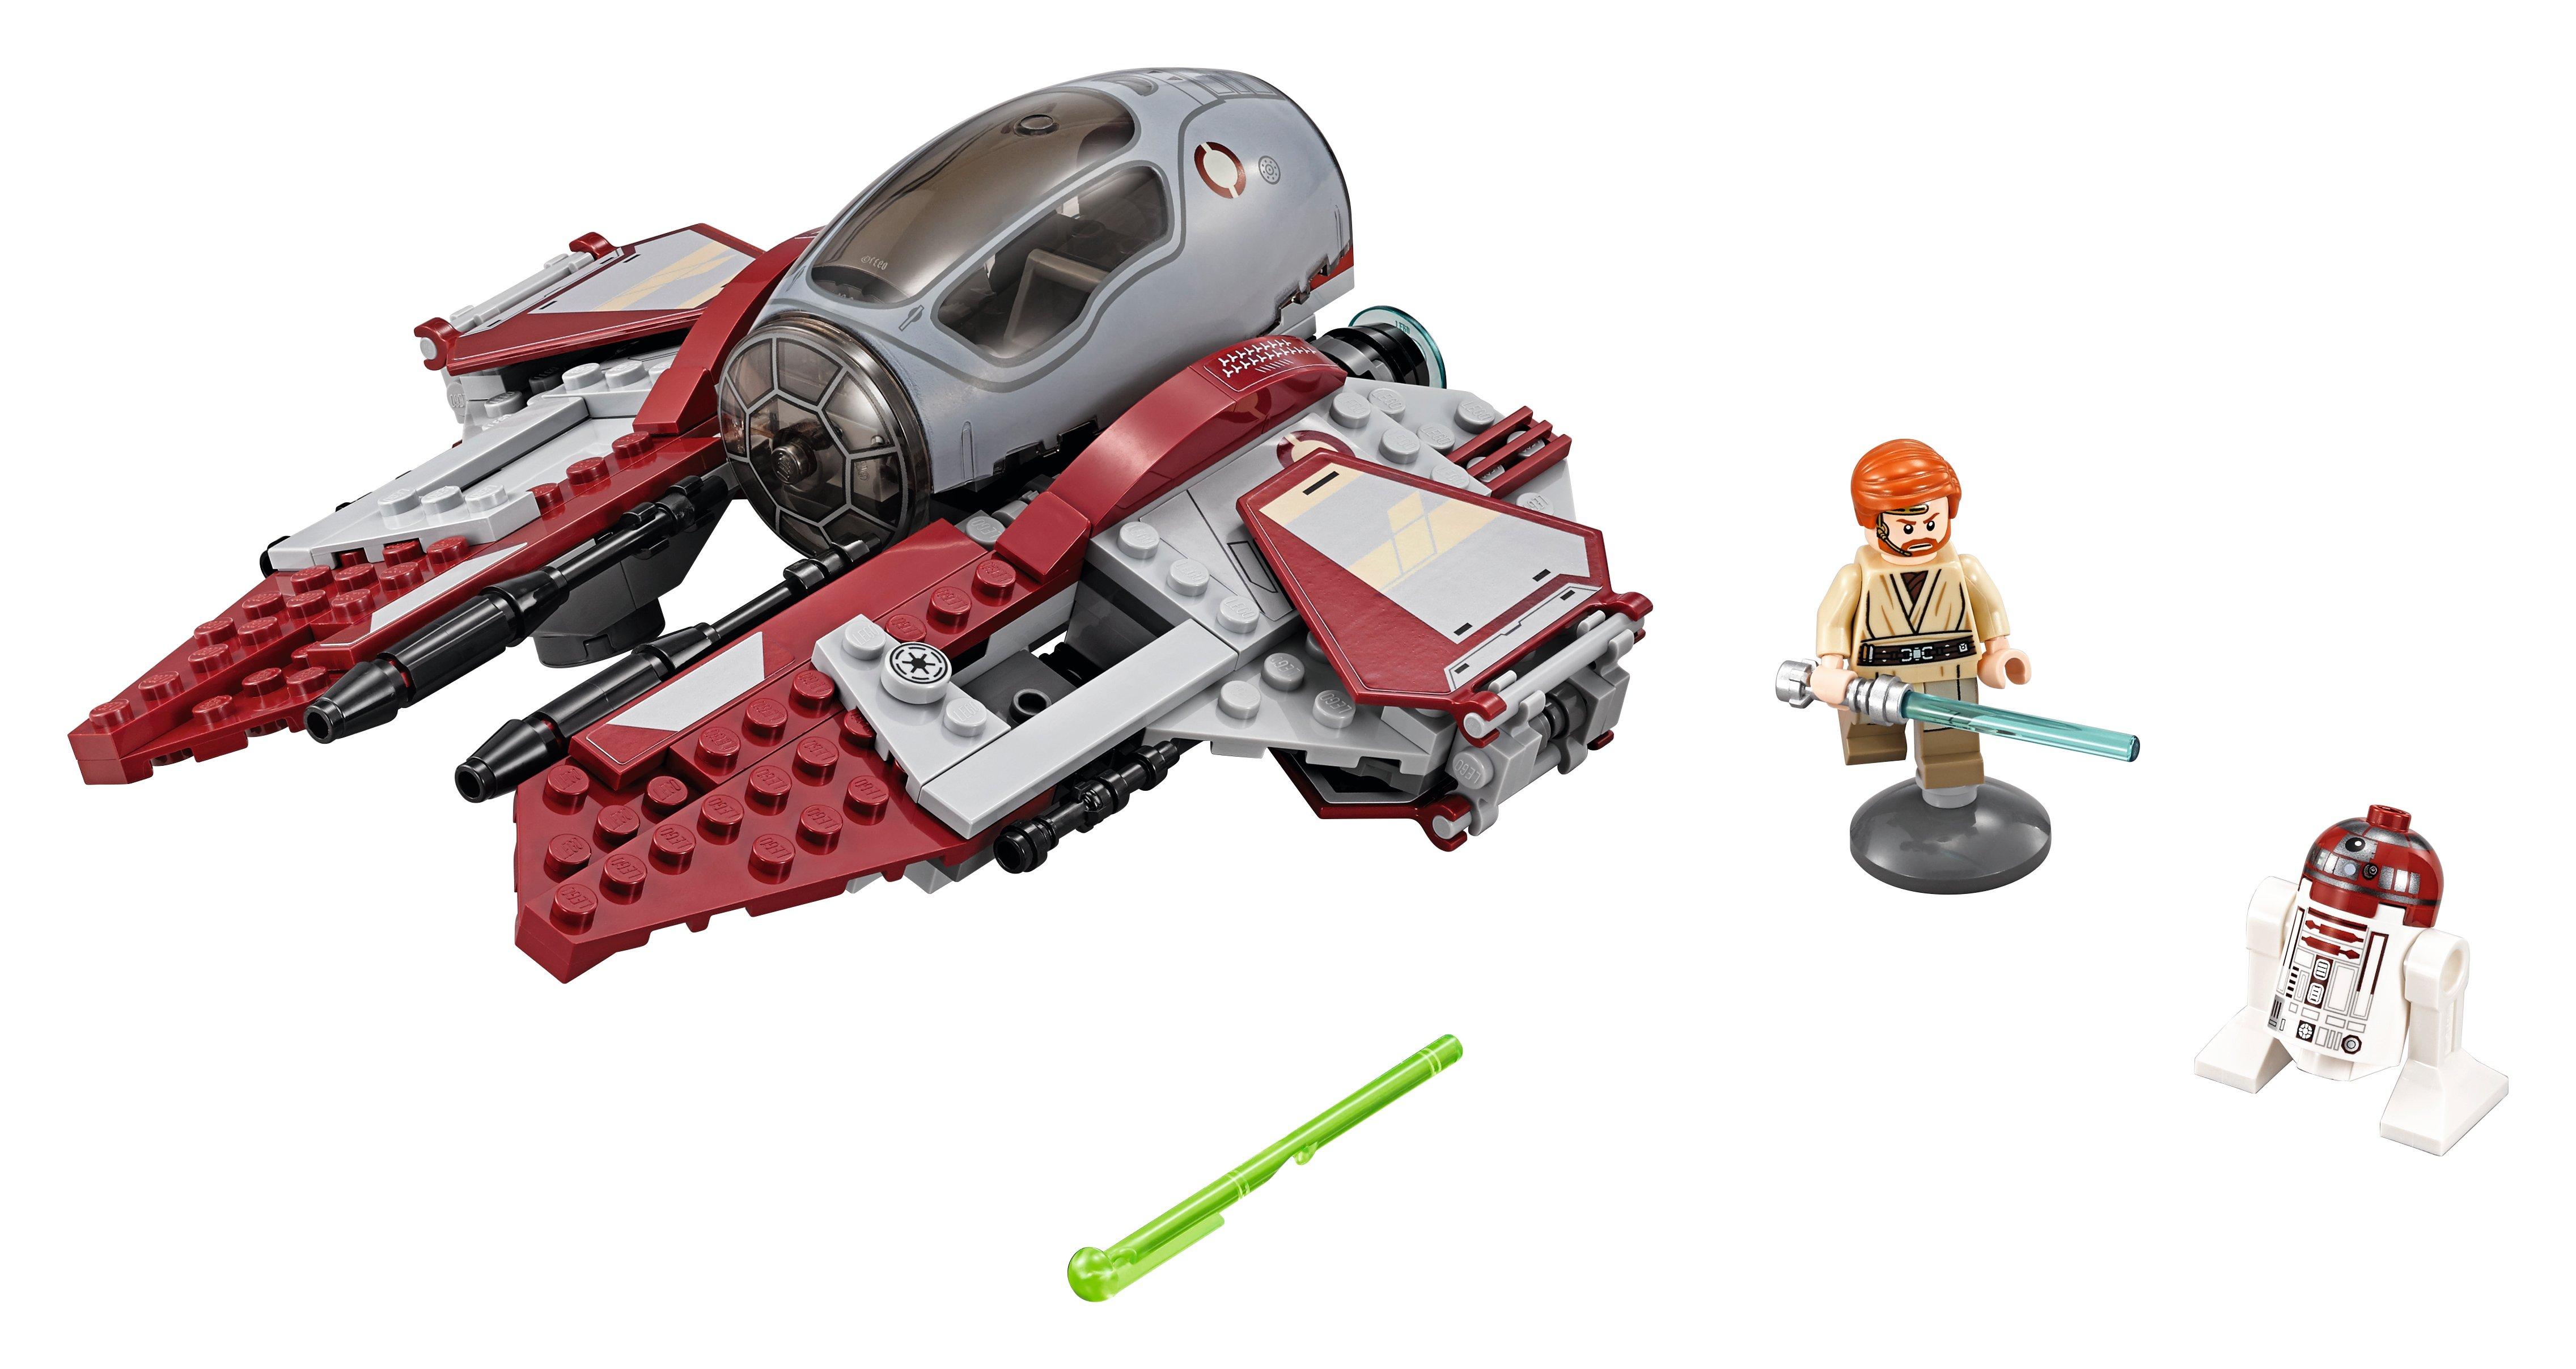 LEGO®  75135 Obi-Wan’s Jedi Interceptor™ 